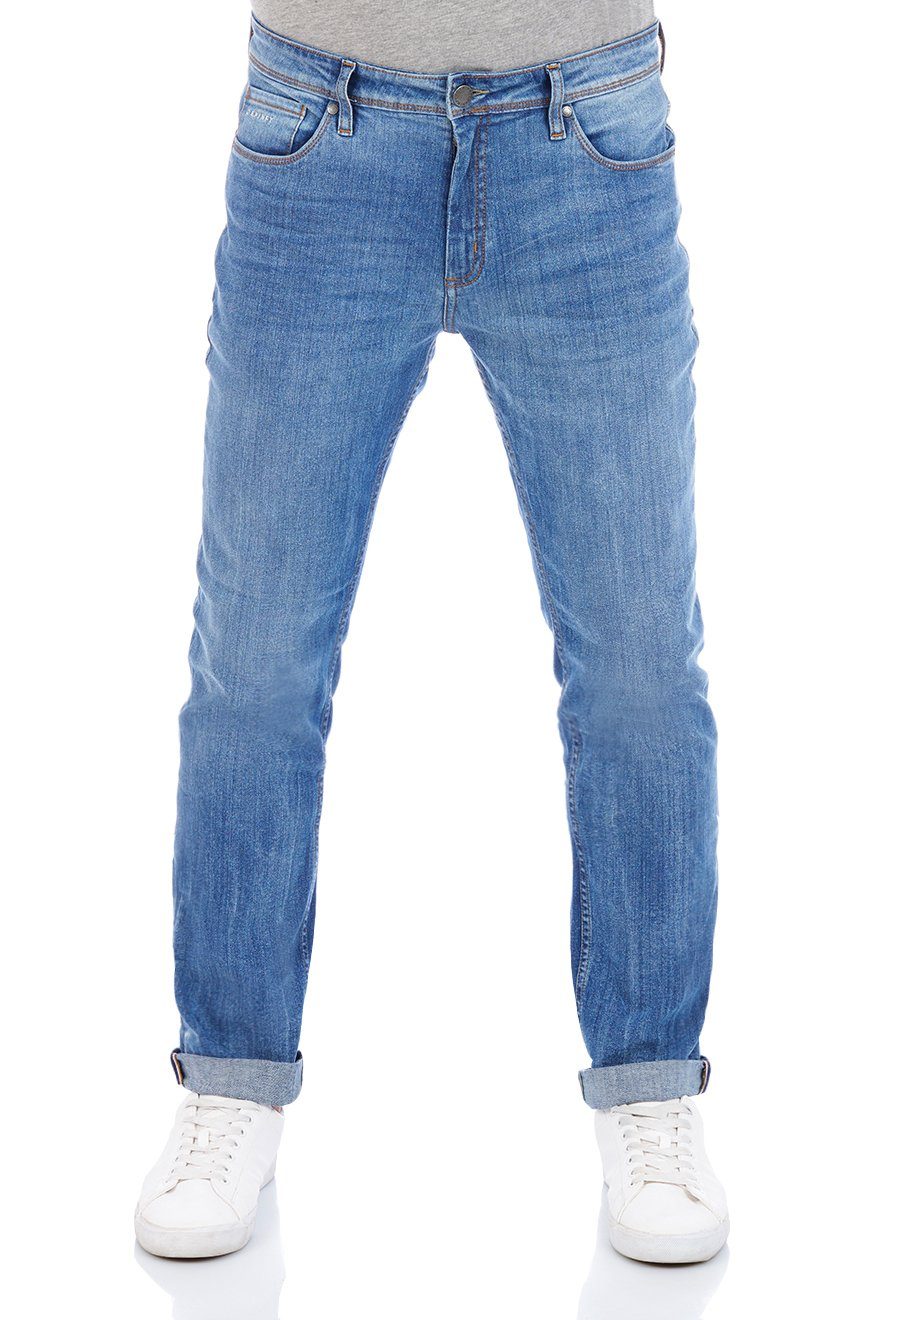 DENIMFY Straight-Jeans Herren Jeanshose DFMiro Straight Fit Jeanshose mit Stretch Middle Blue Denim (M236)